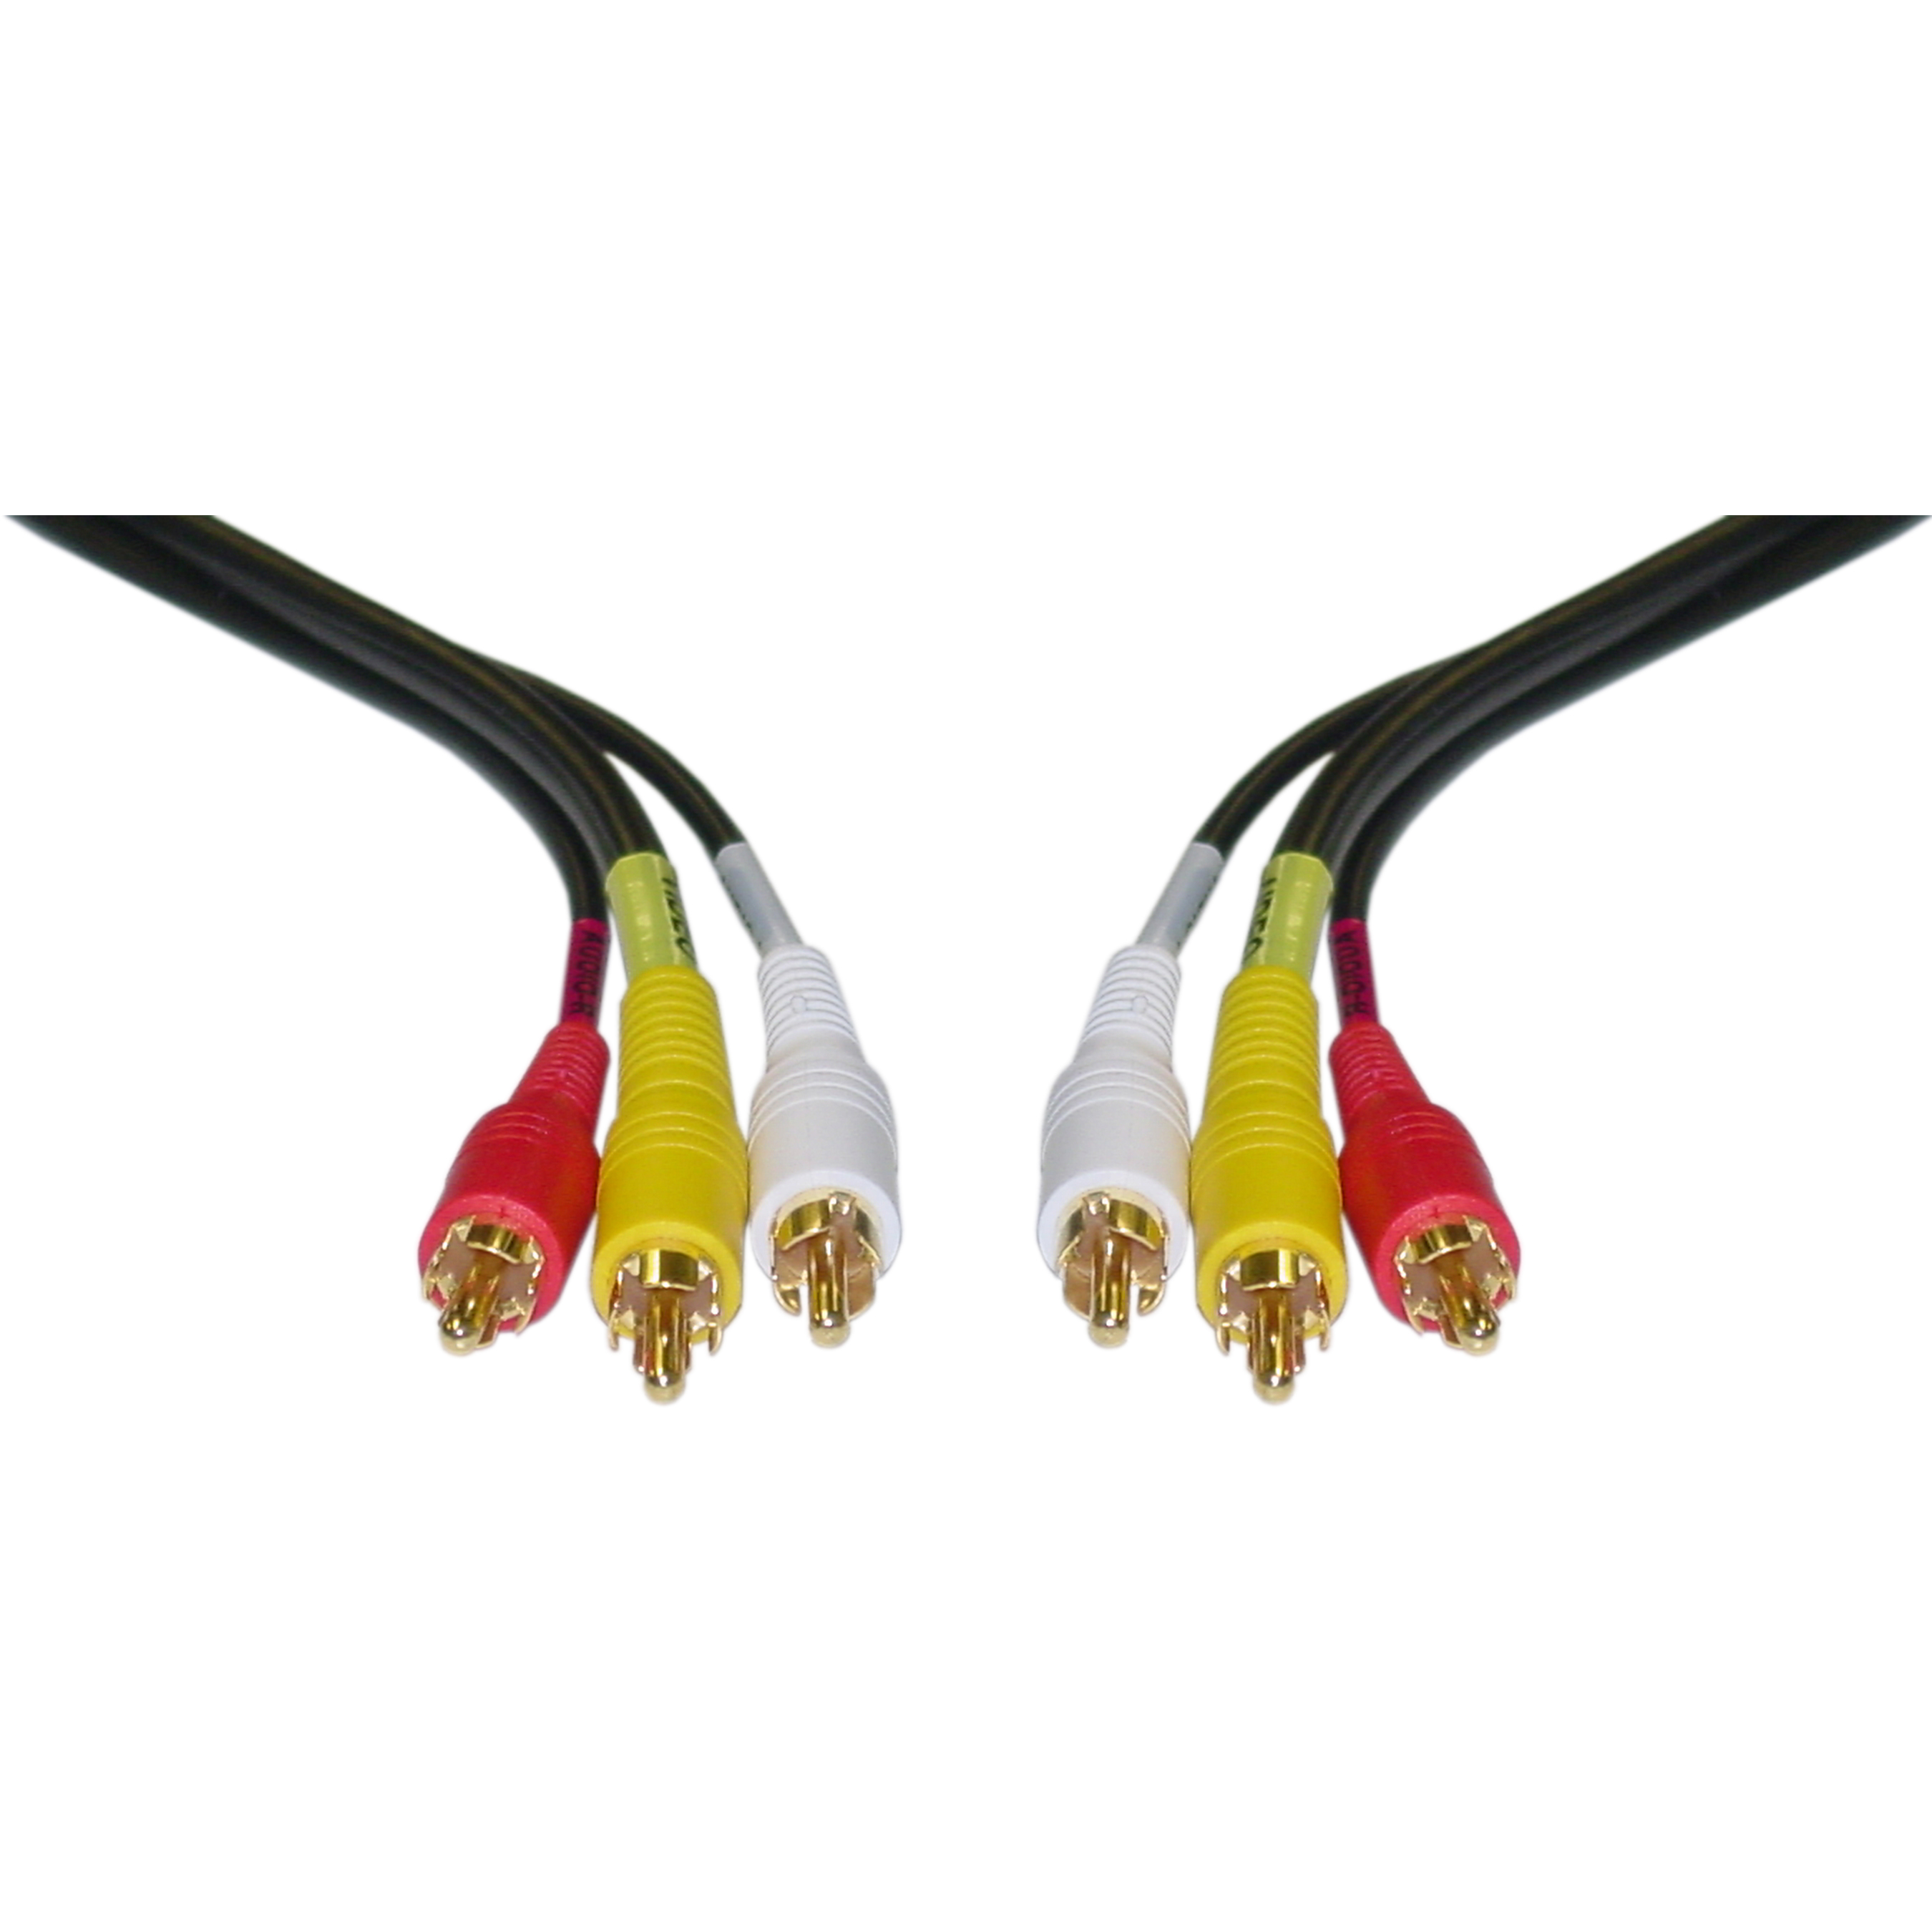 RG-59/U 50FT 5-RCA Component Video/Audio Coaxial Cable